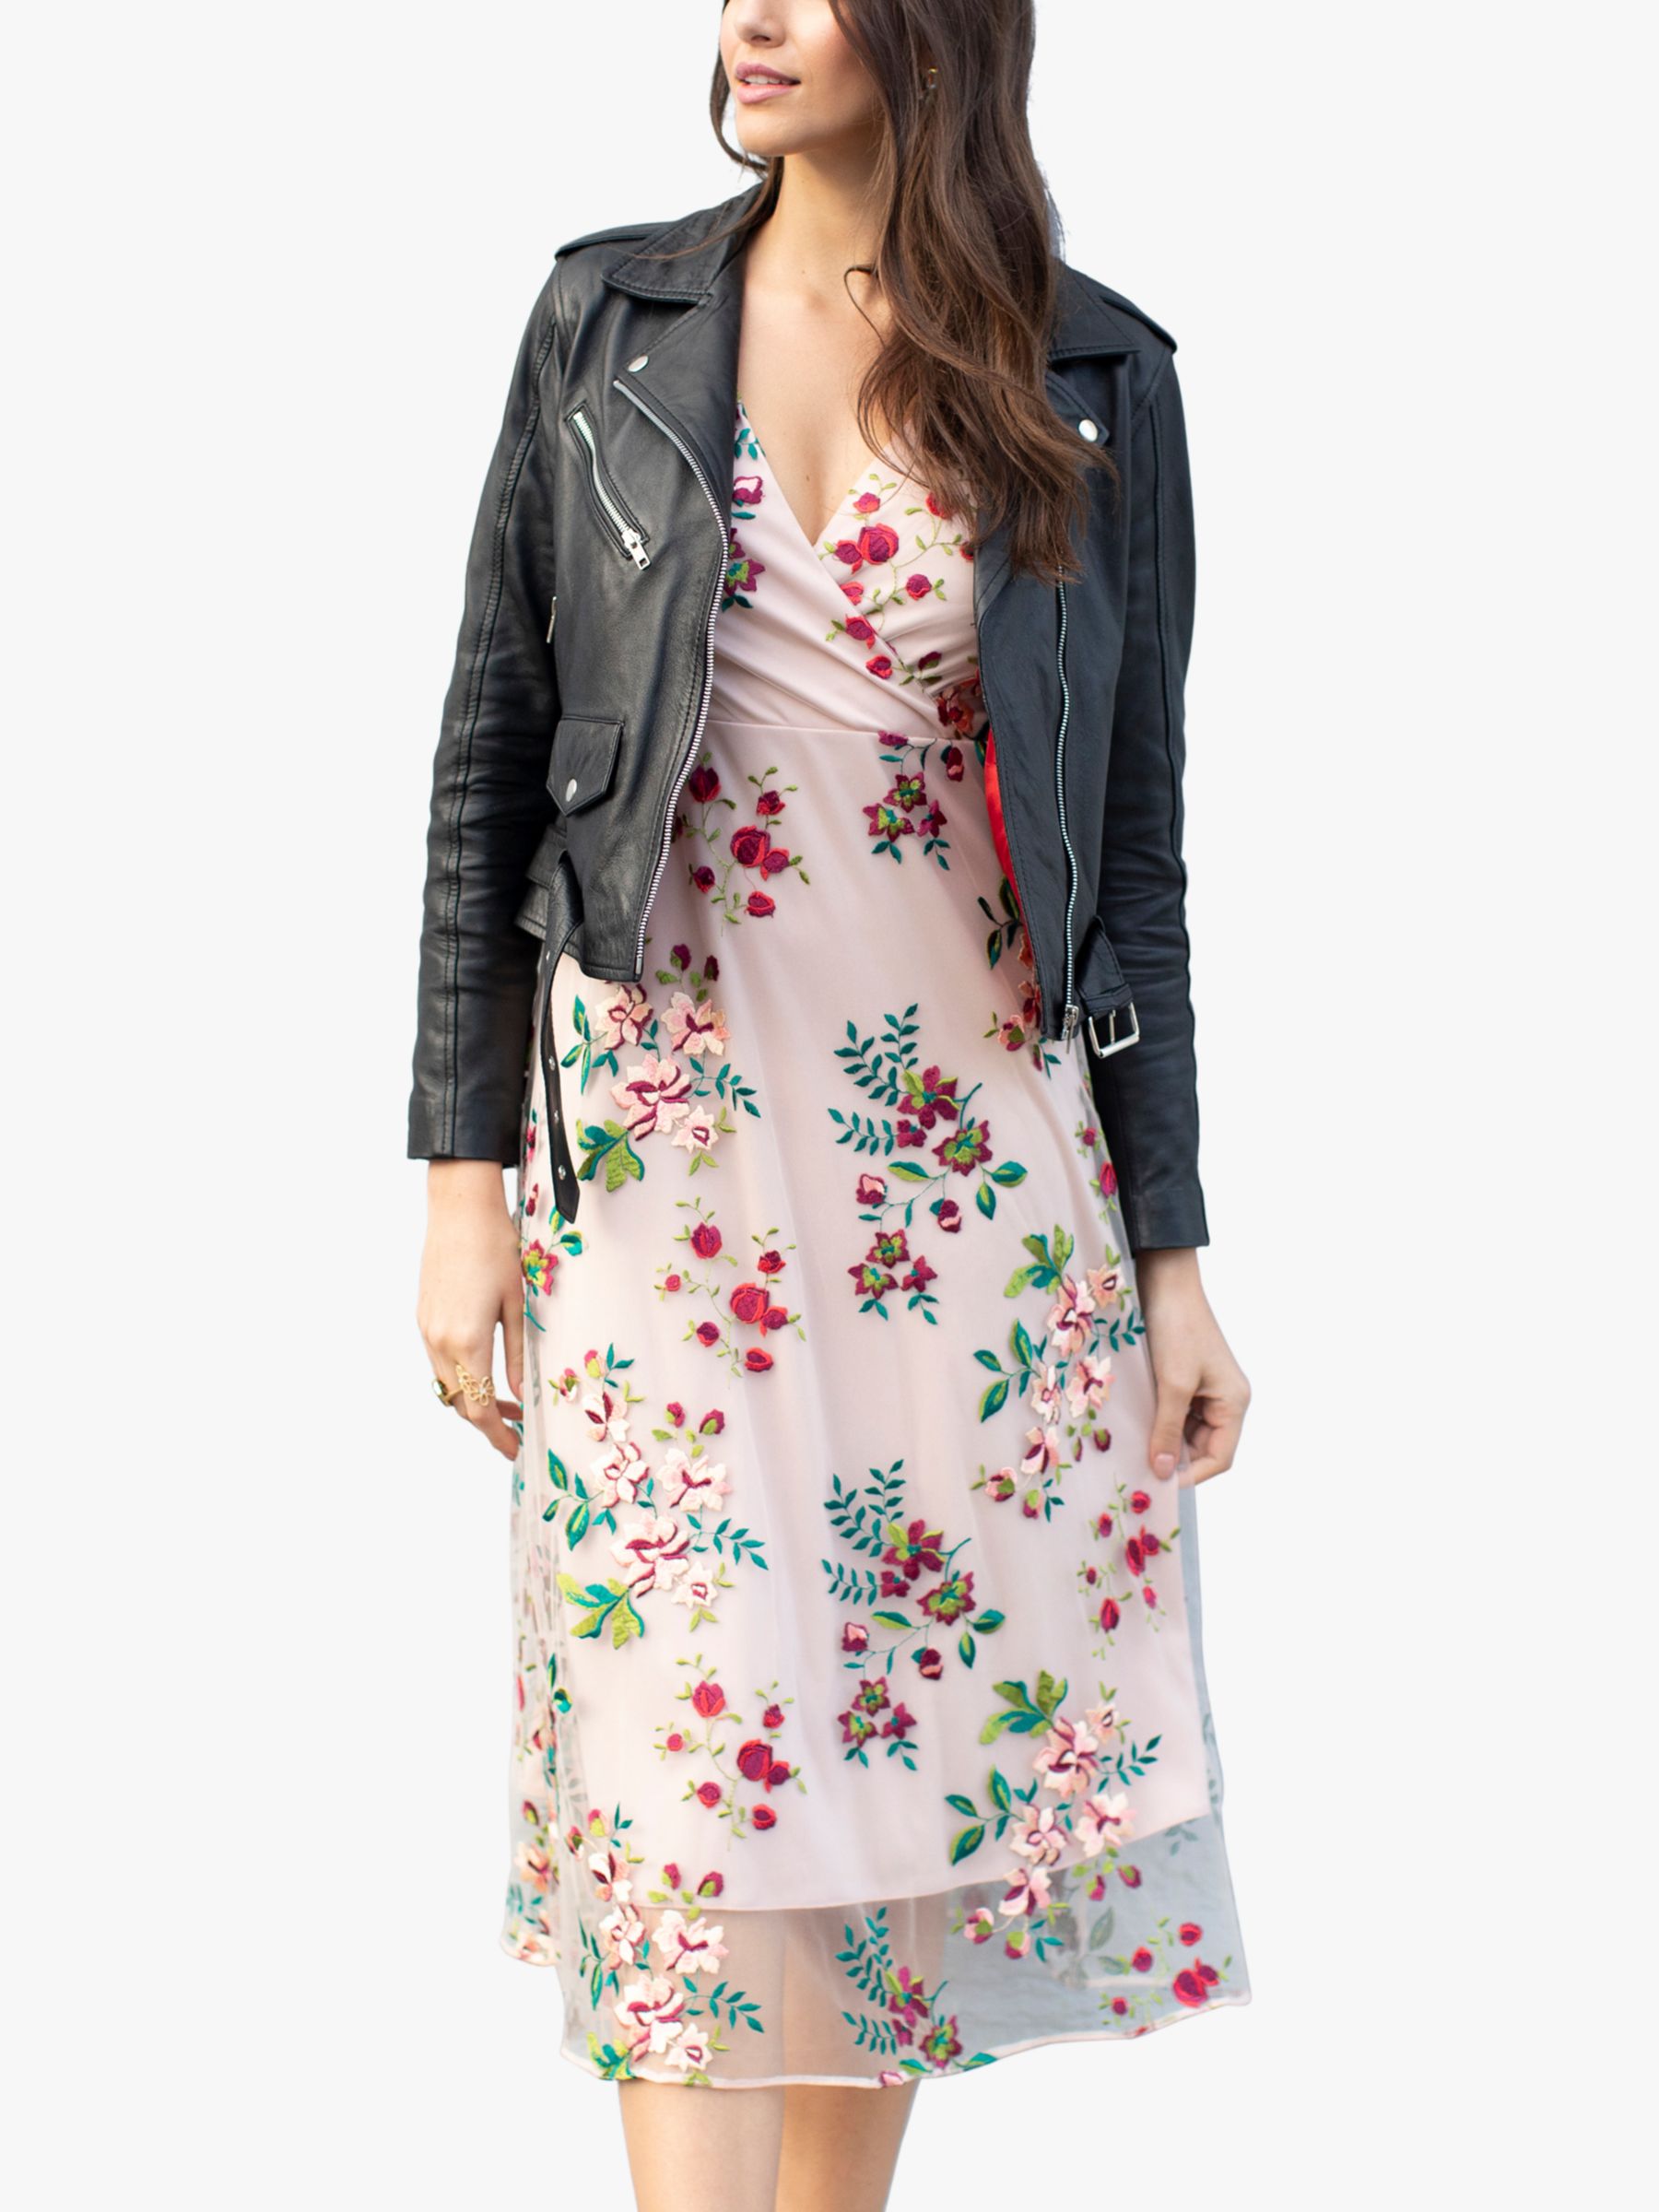 Alie Street Grace Midi Dress, Blushing Blooms, 6-8